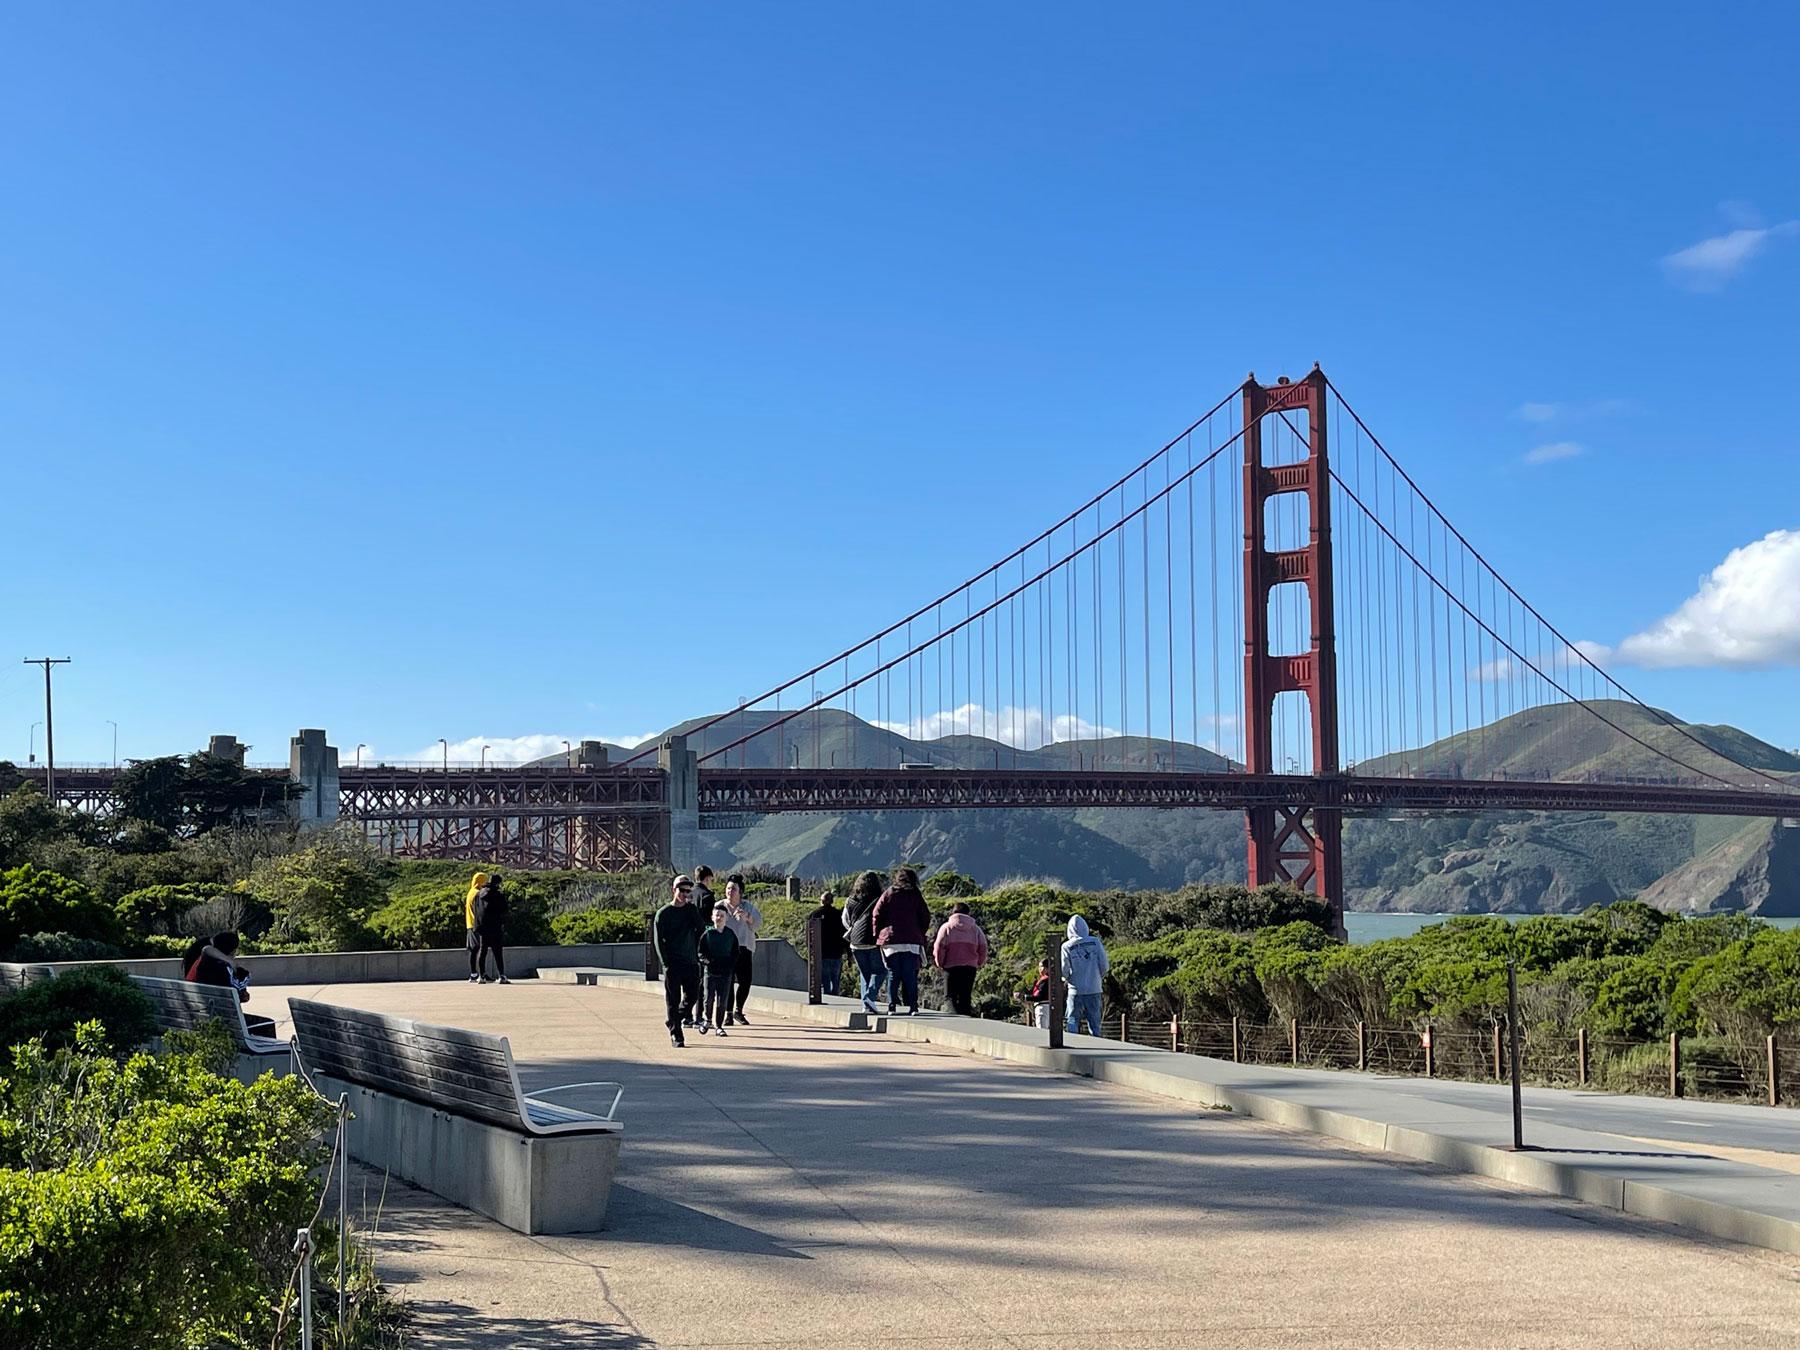 Visitors on the Presidio Promenade near Battery East overlooking the Golden Gate Bridge.